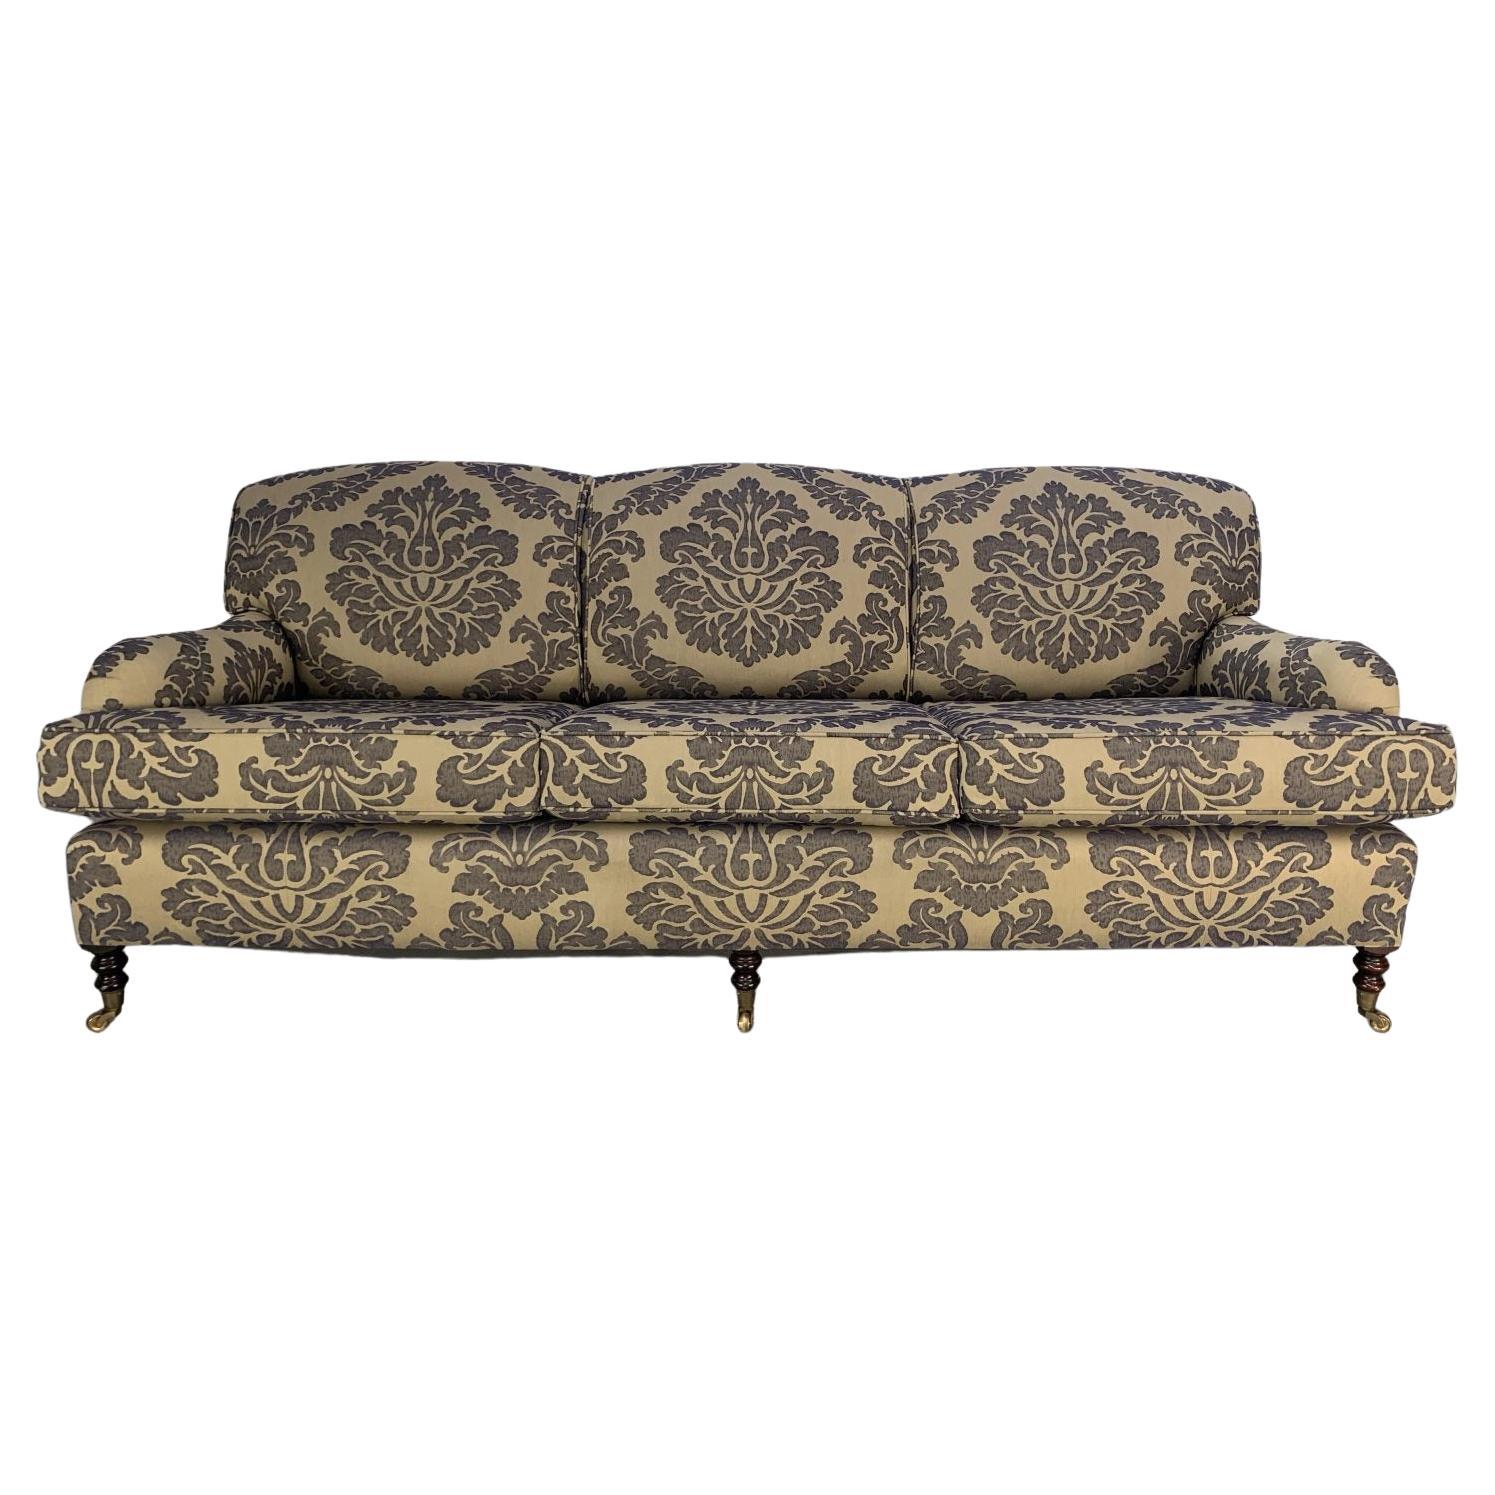 George Smith Signature “Standard-Arm” Large 3-Seat Sofa in Bernini Damask For Sale